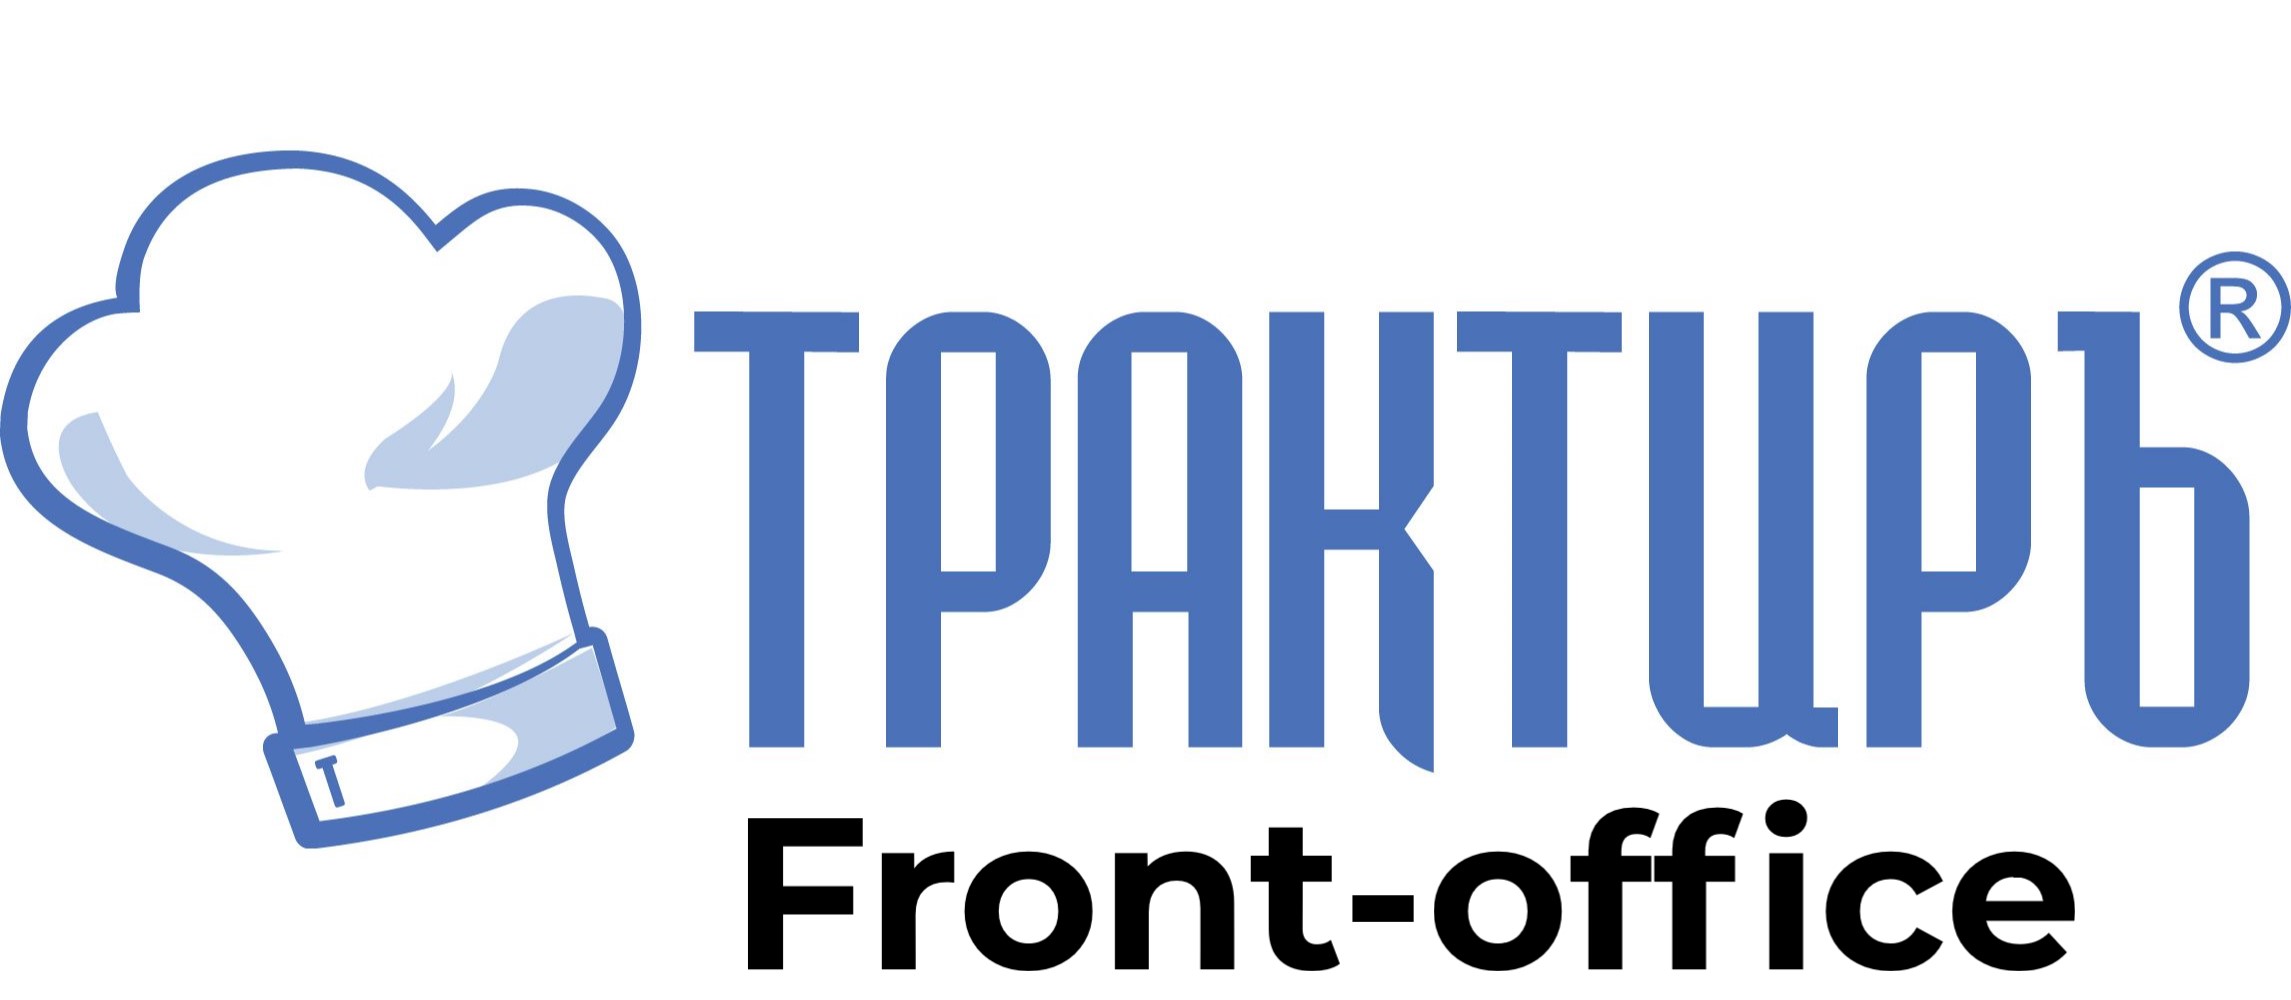 Трактиръ: Front-Office v4. Основная поставка в Рыбинске